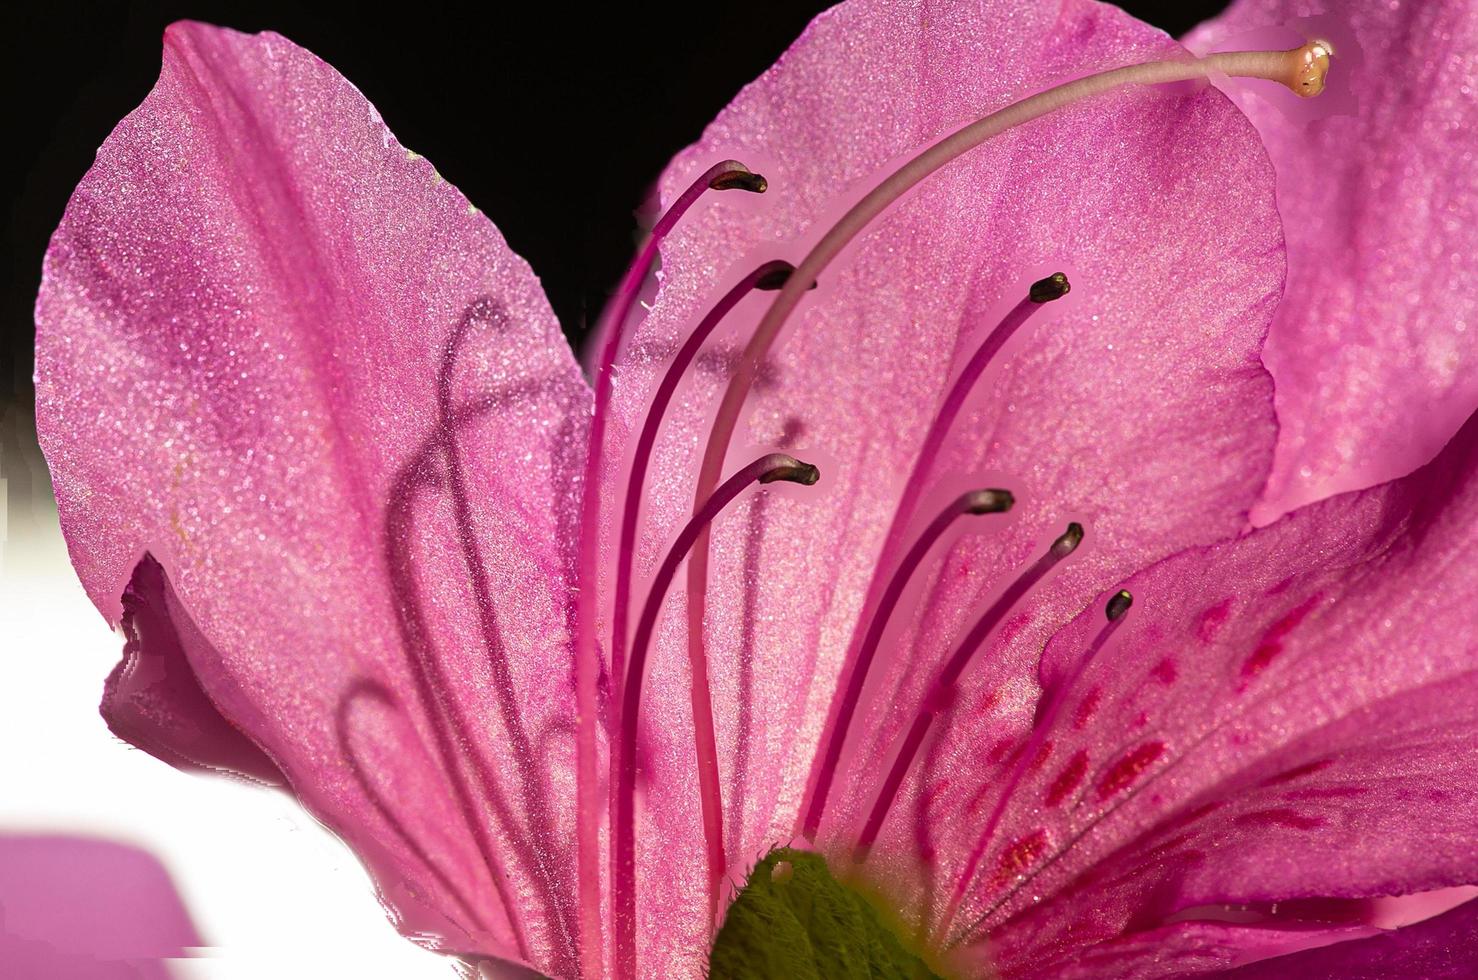 flor rosa com estames e pistilos foto